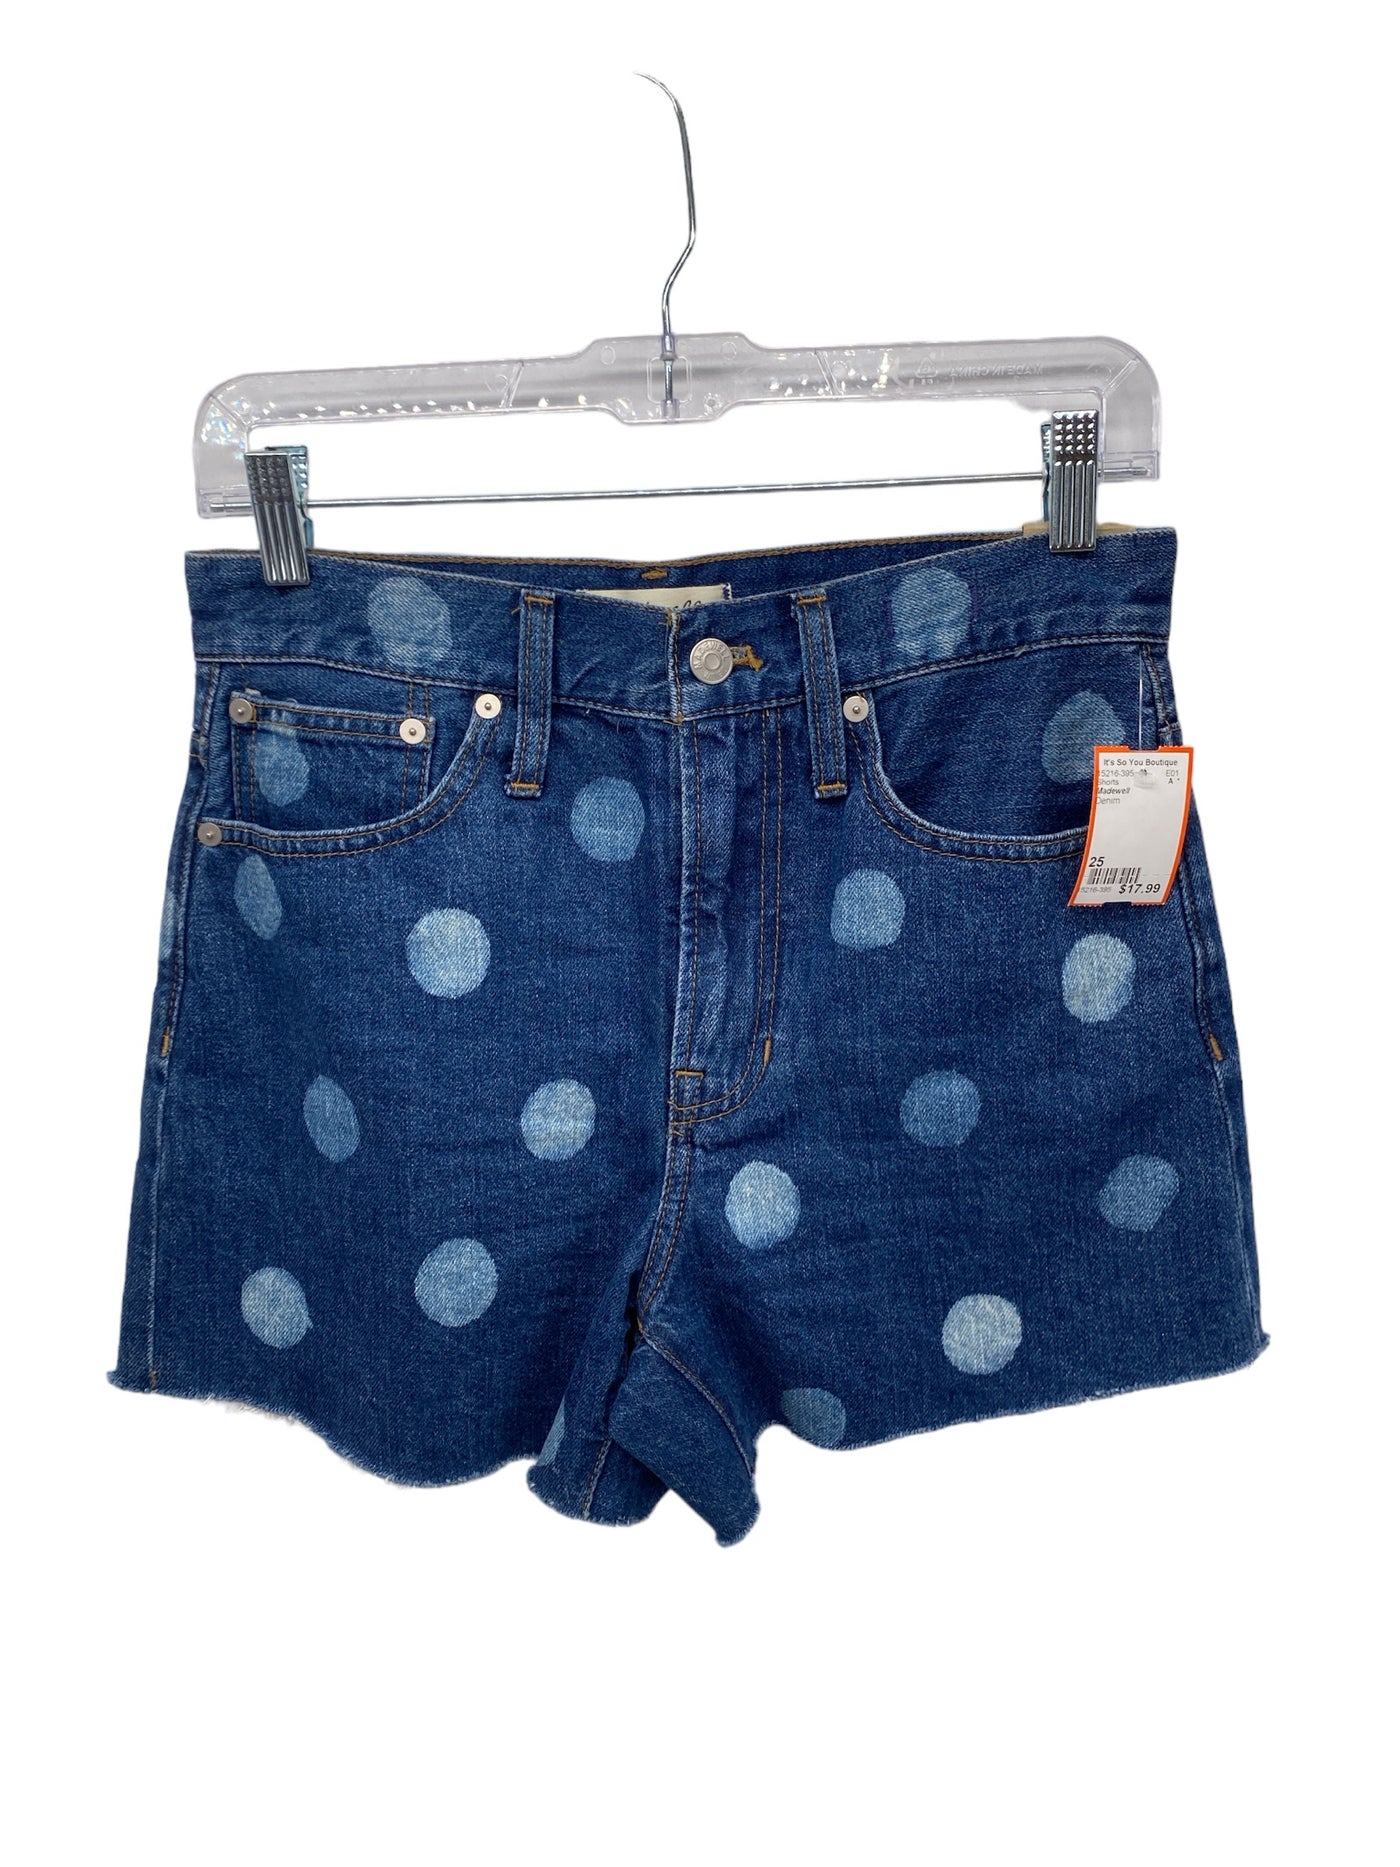 Madewell Misses Size 25 Denim Shorts